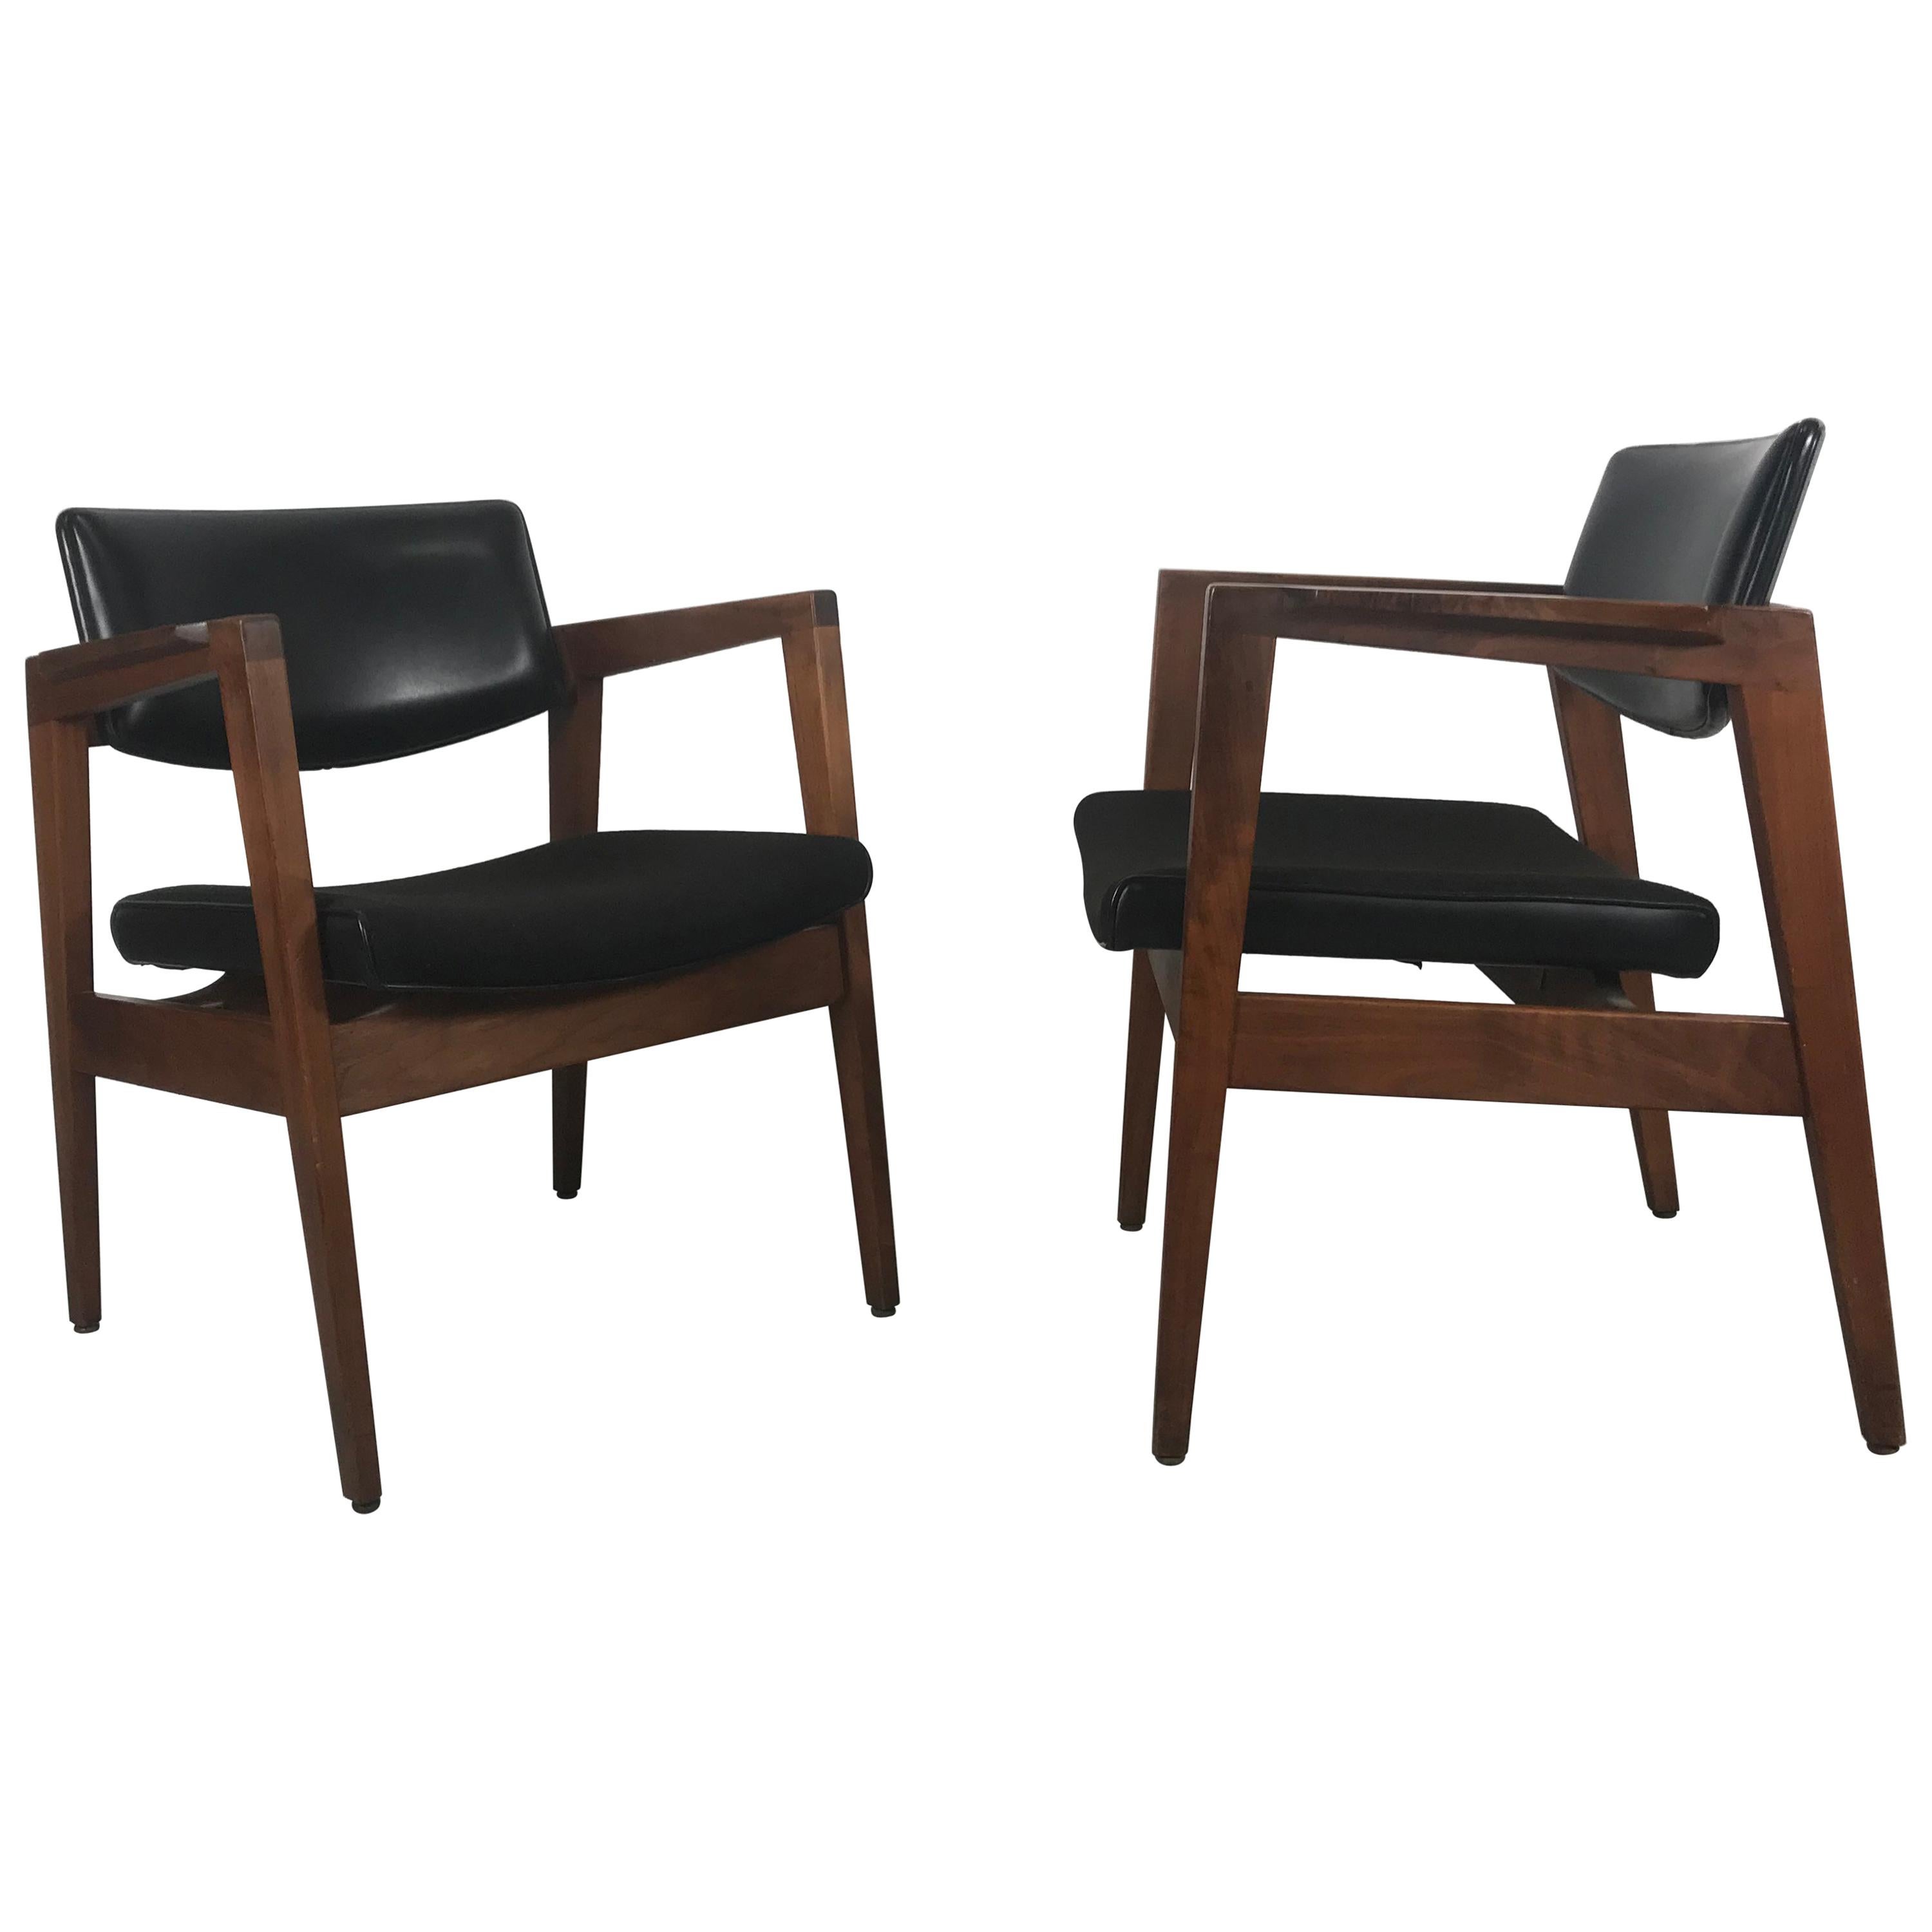 classic midcentury modern lounge chairs walnut framesgunlocke jens  risom